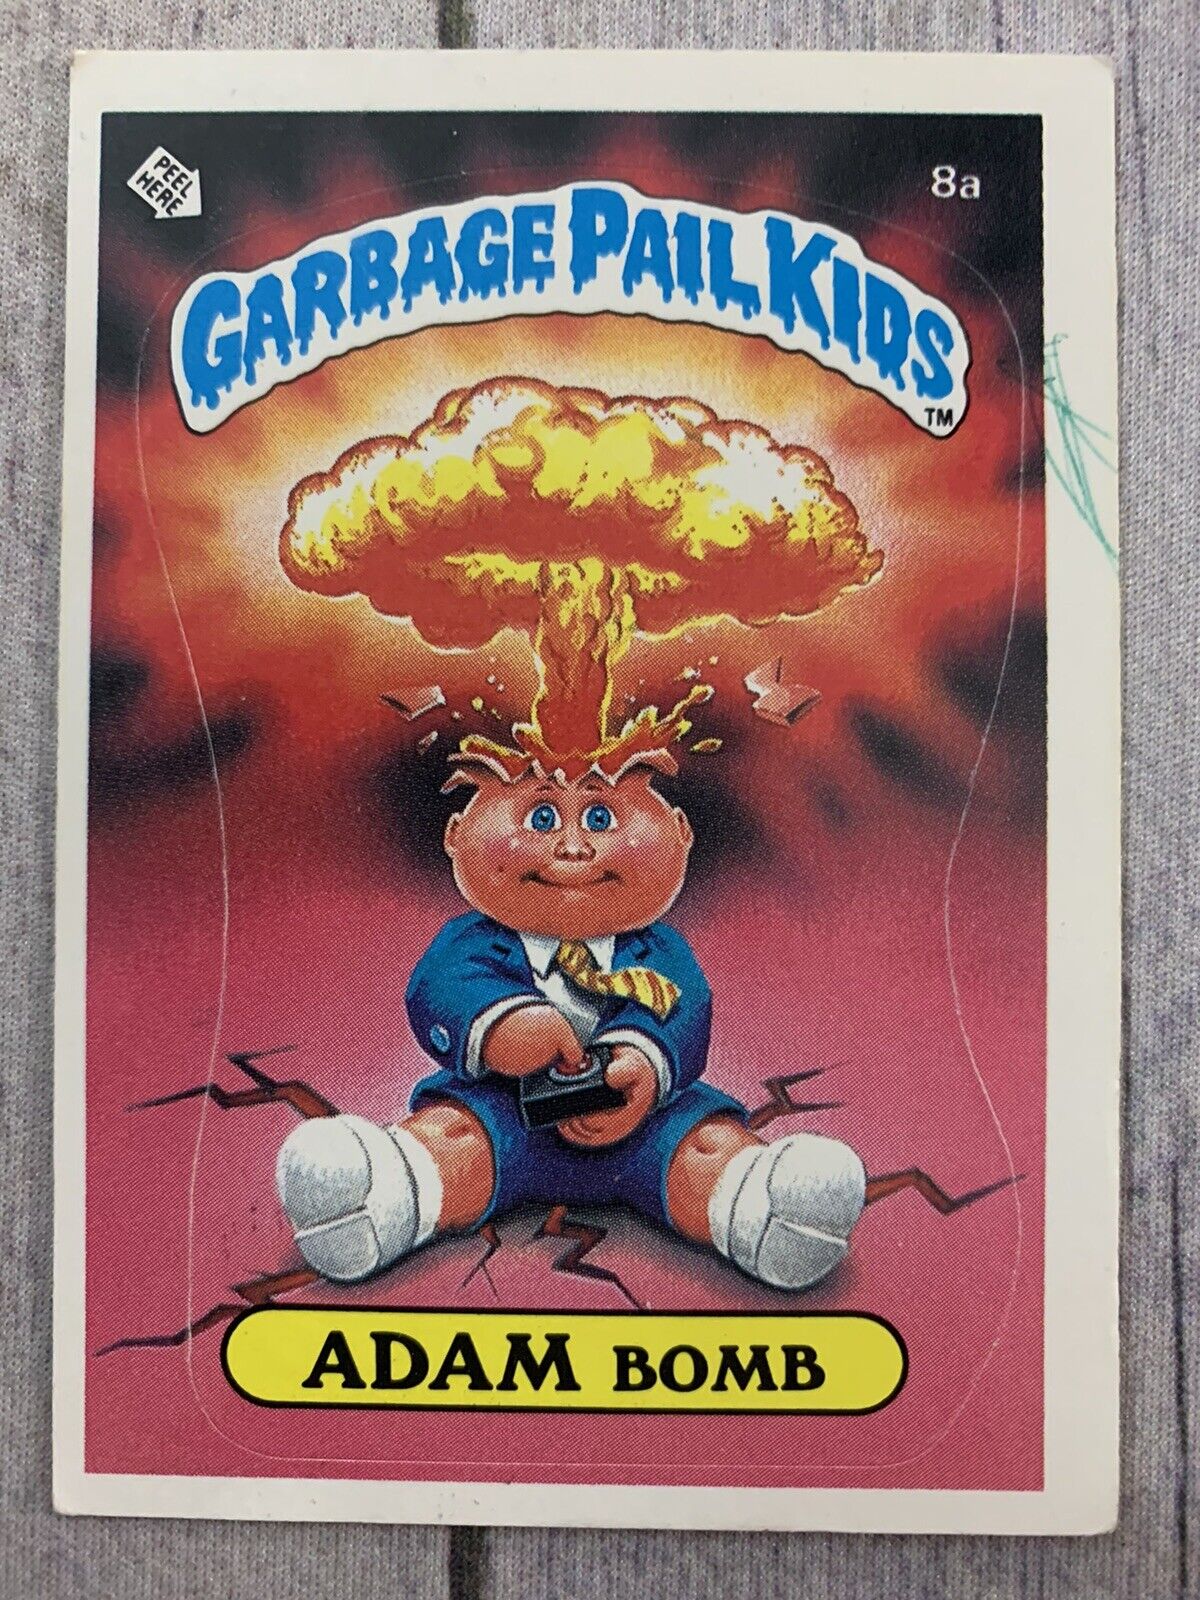 GPK Garbage Pail Kids OS 1st Series Adam Bomb Card 8a Checklist